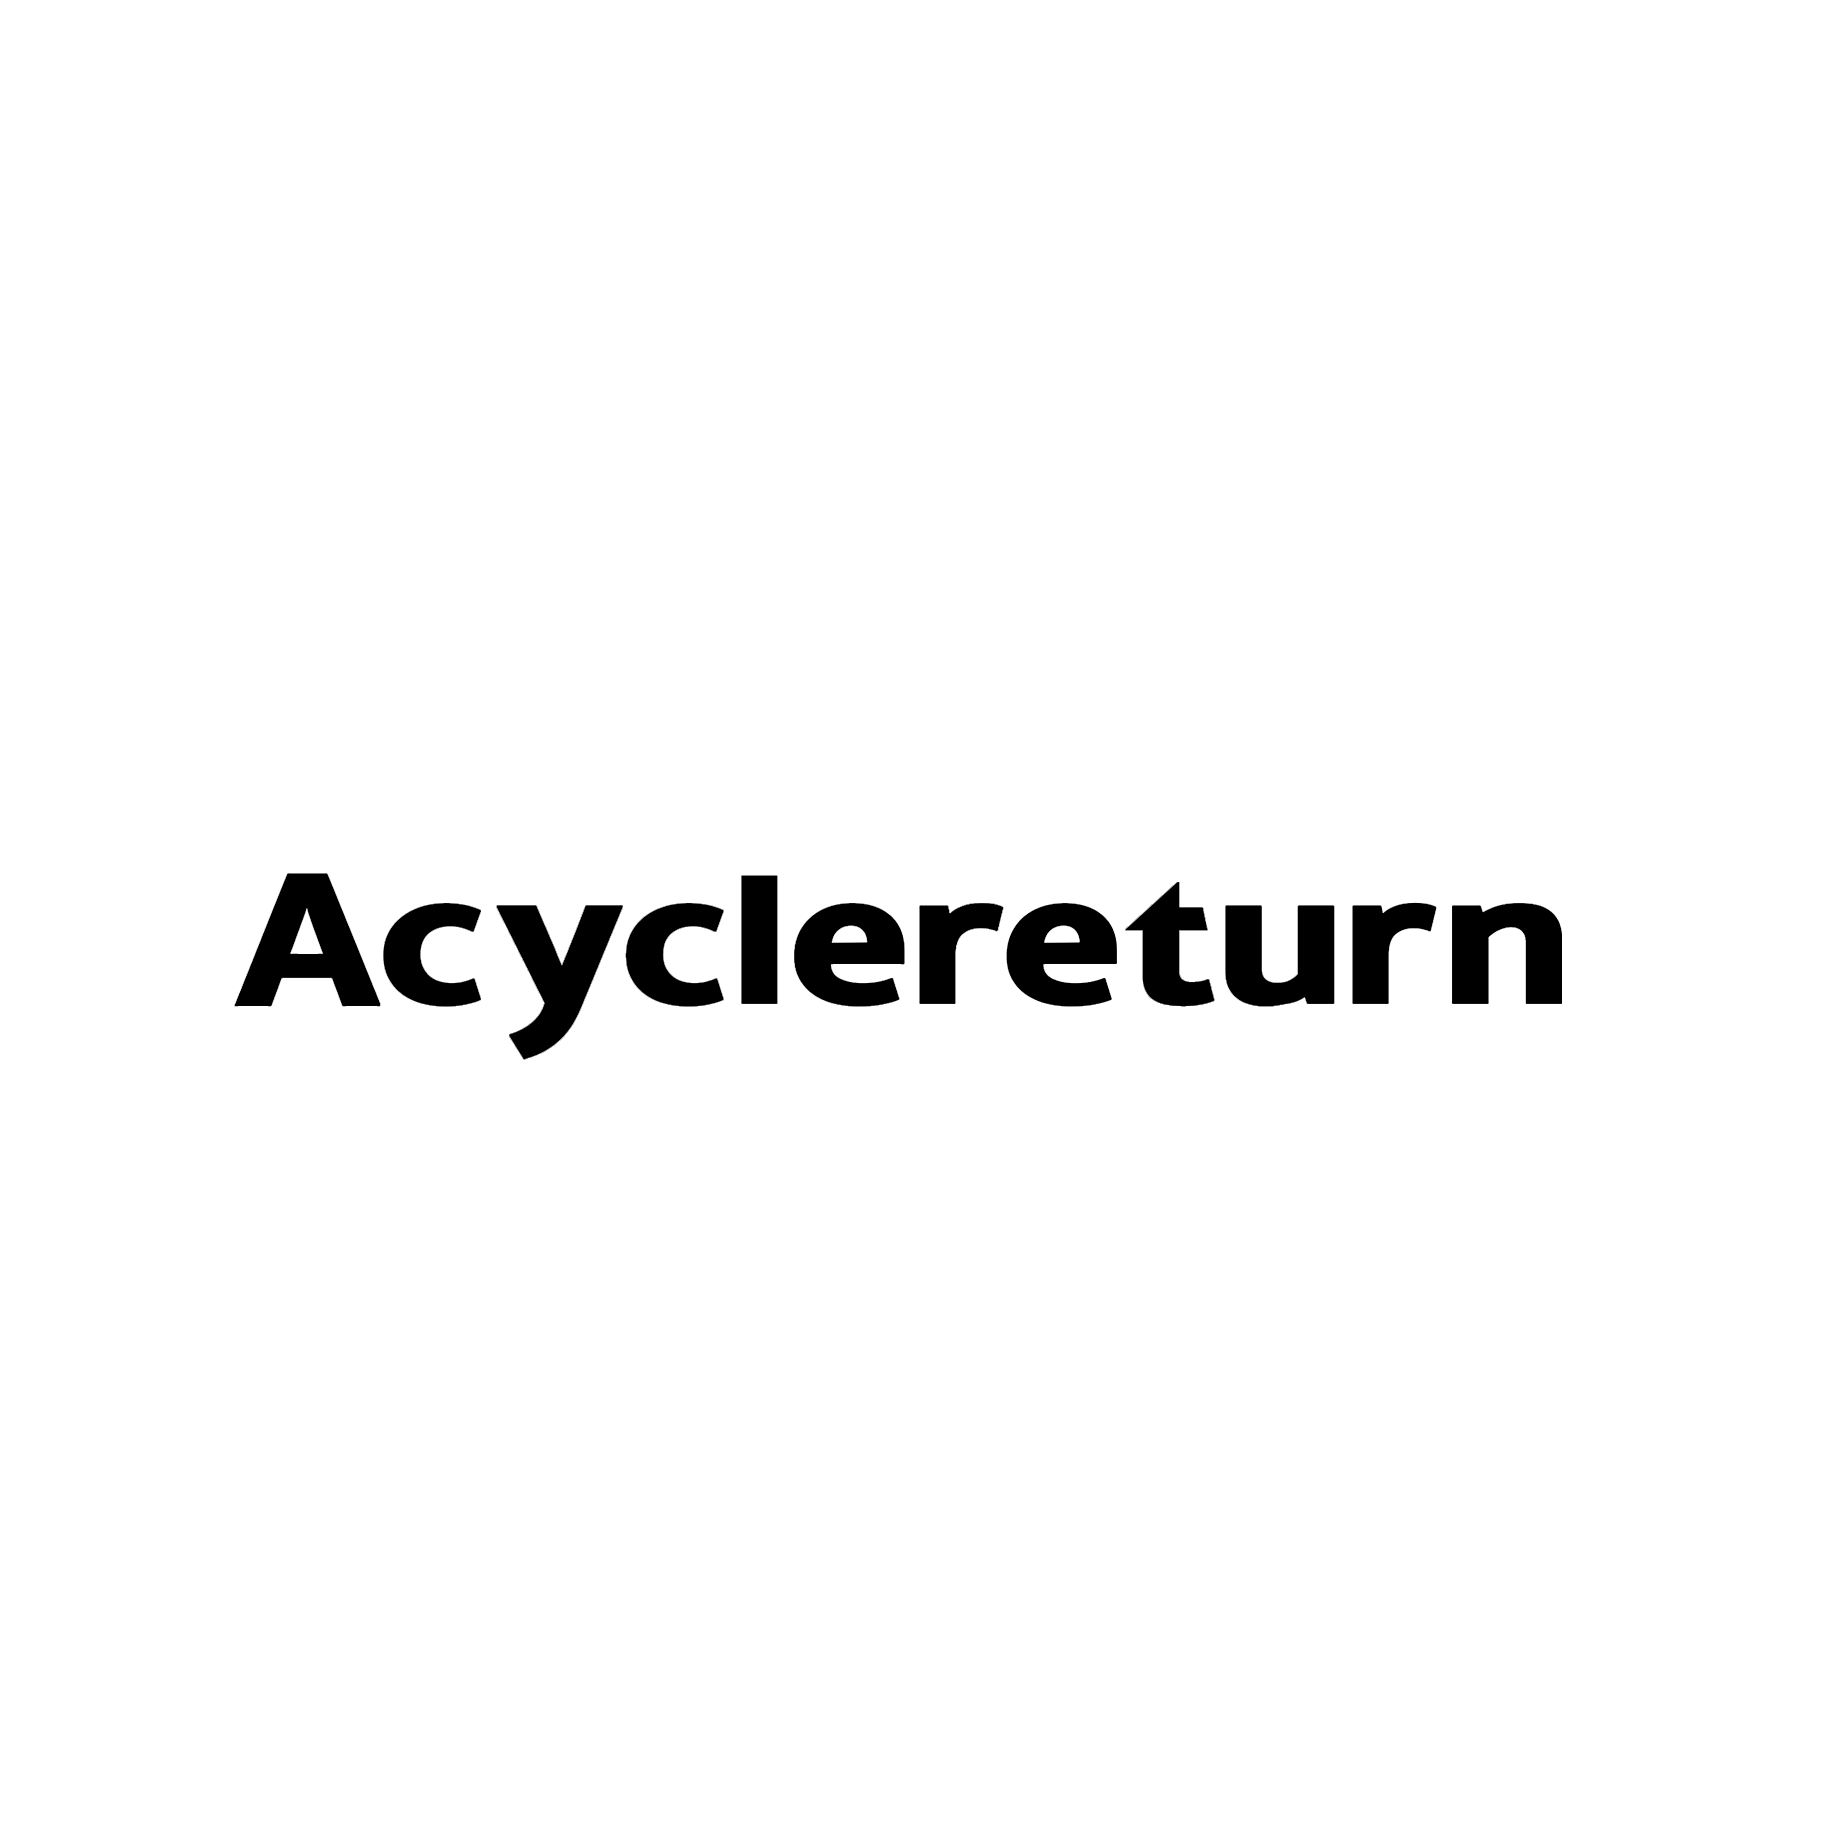 Acyclereturn